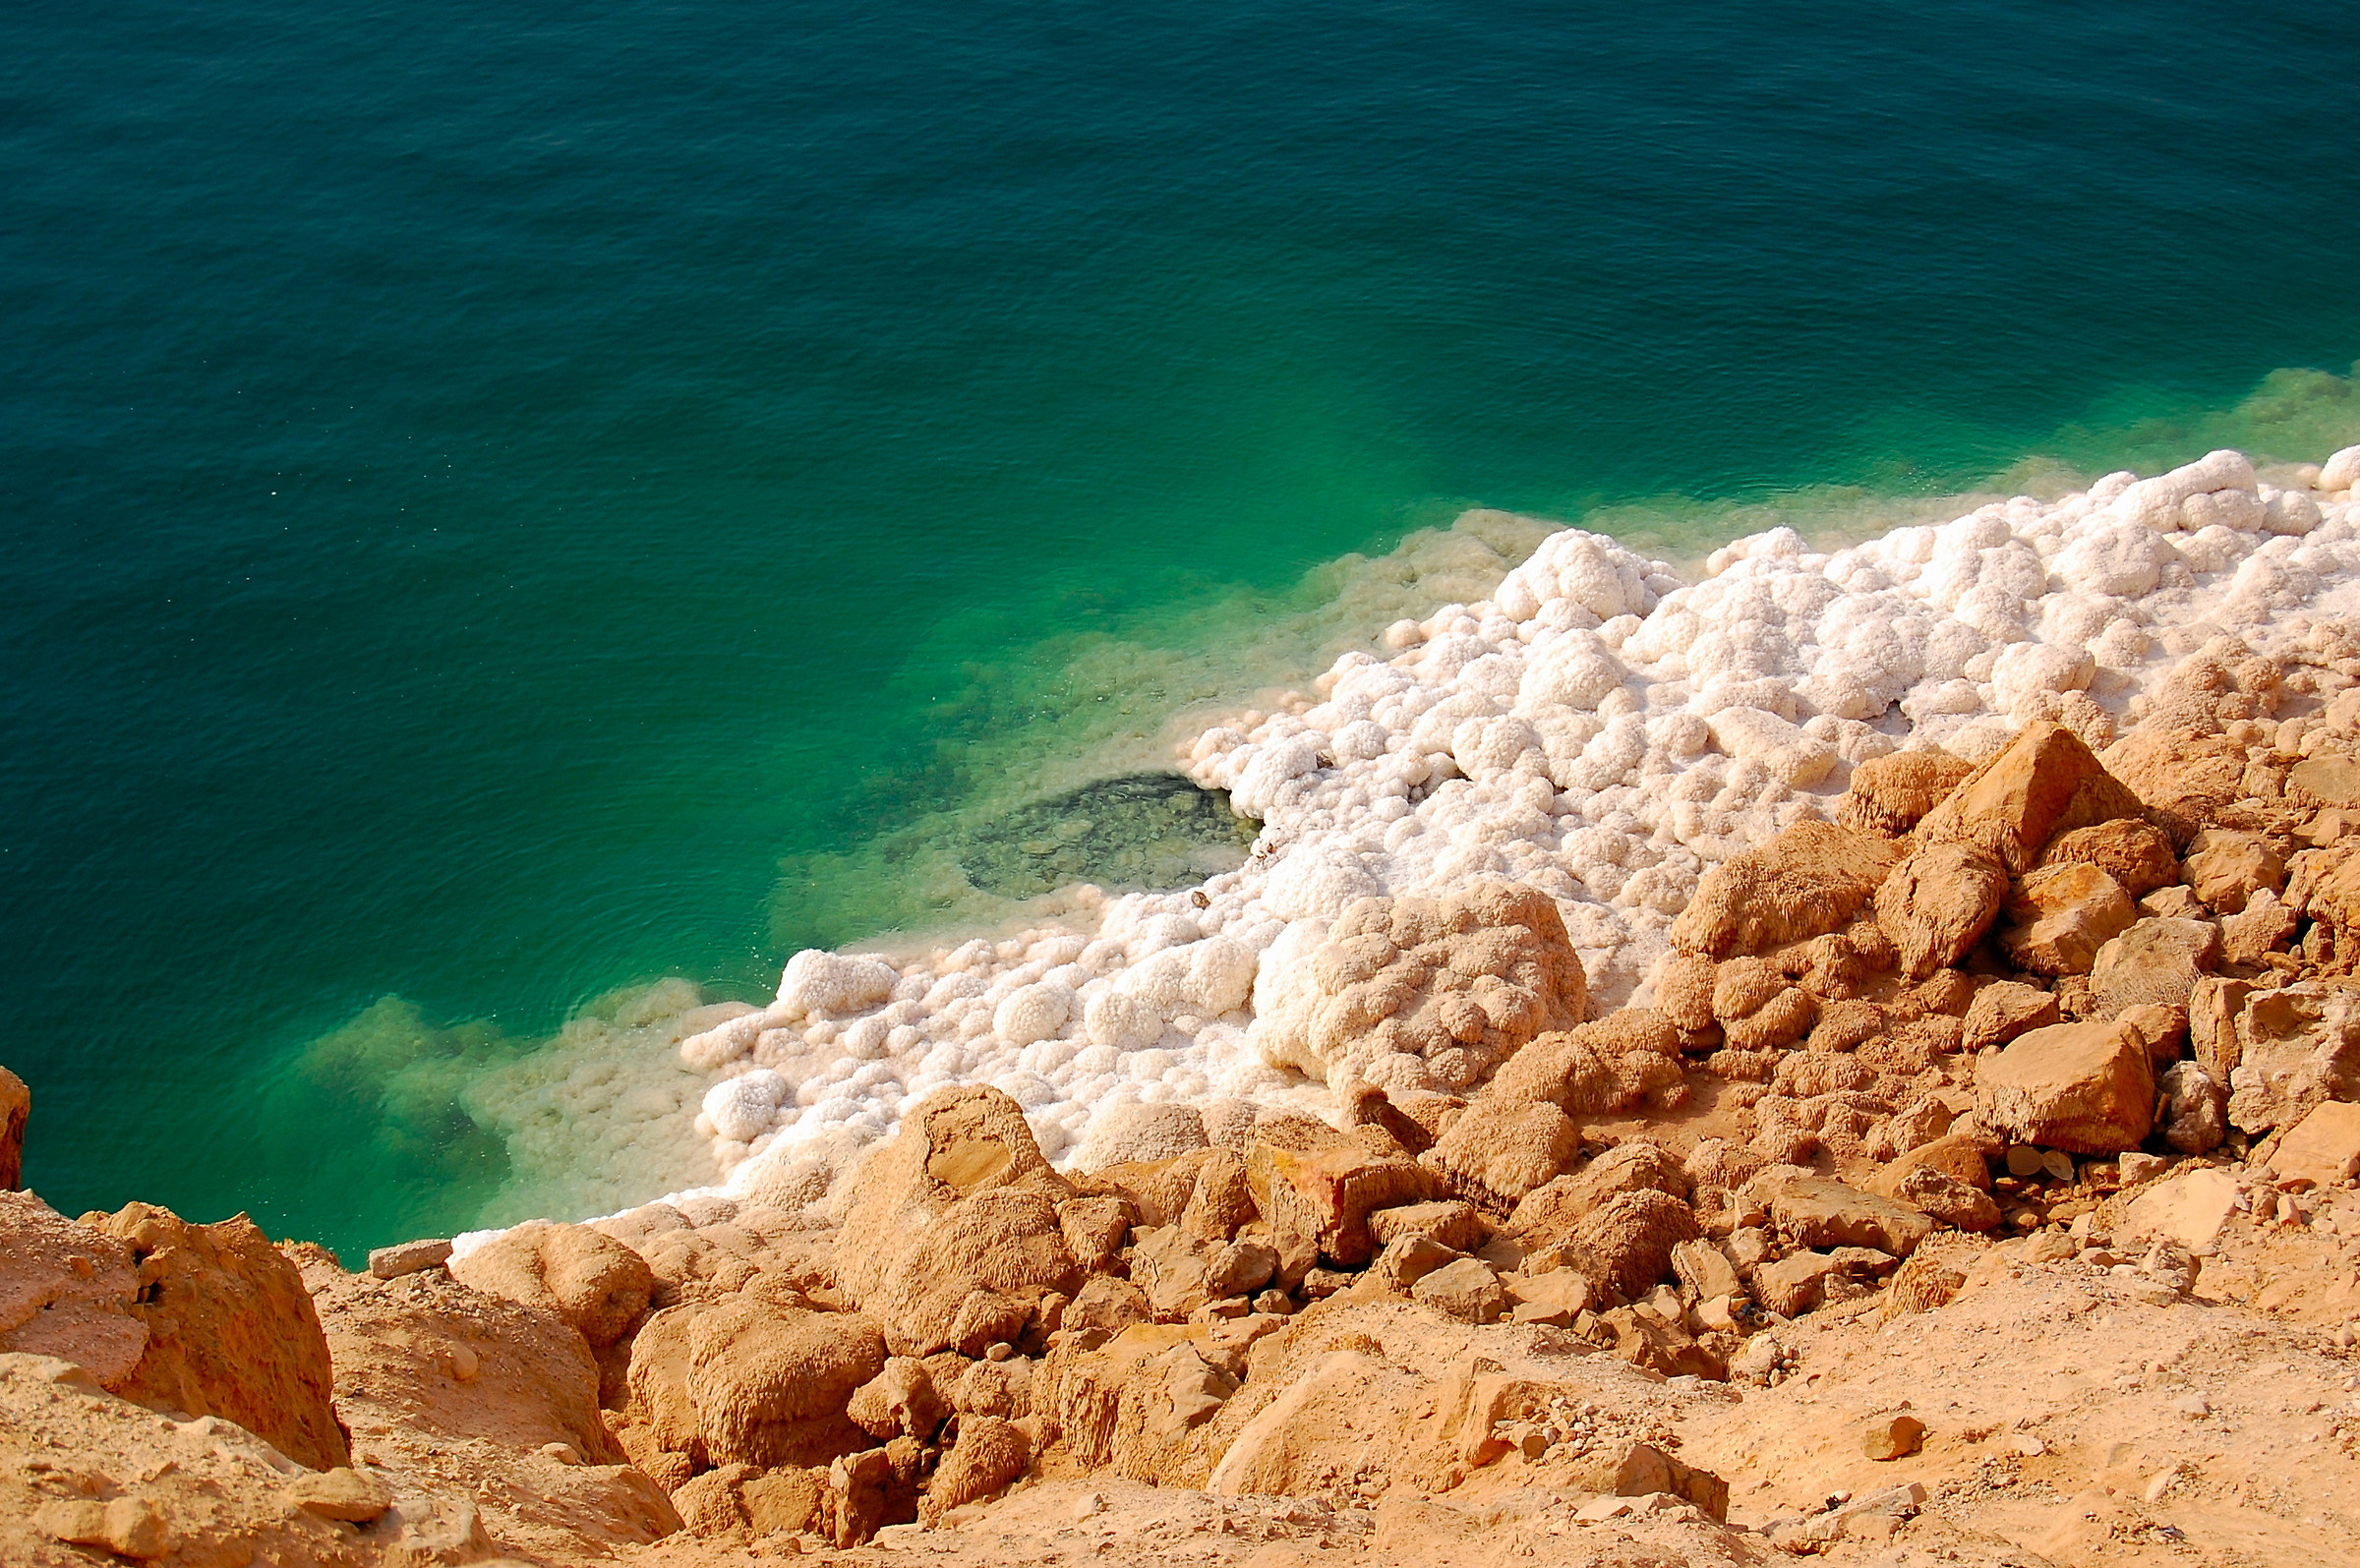 Jordan: Color of the Dead Sea...